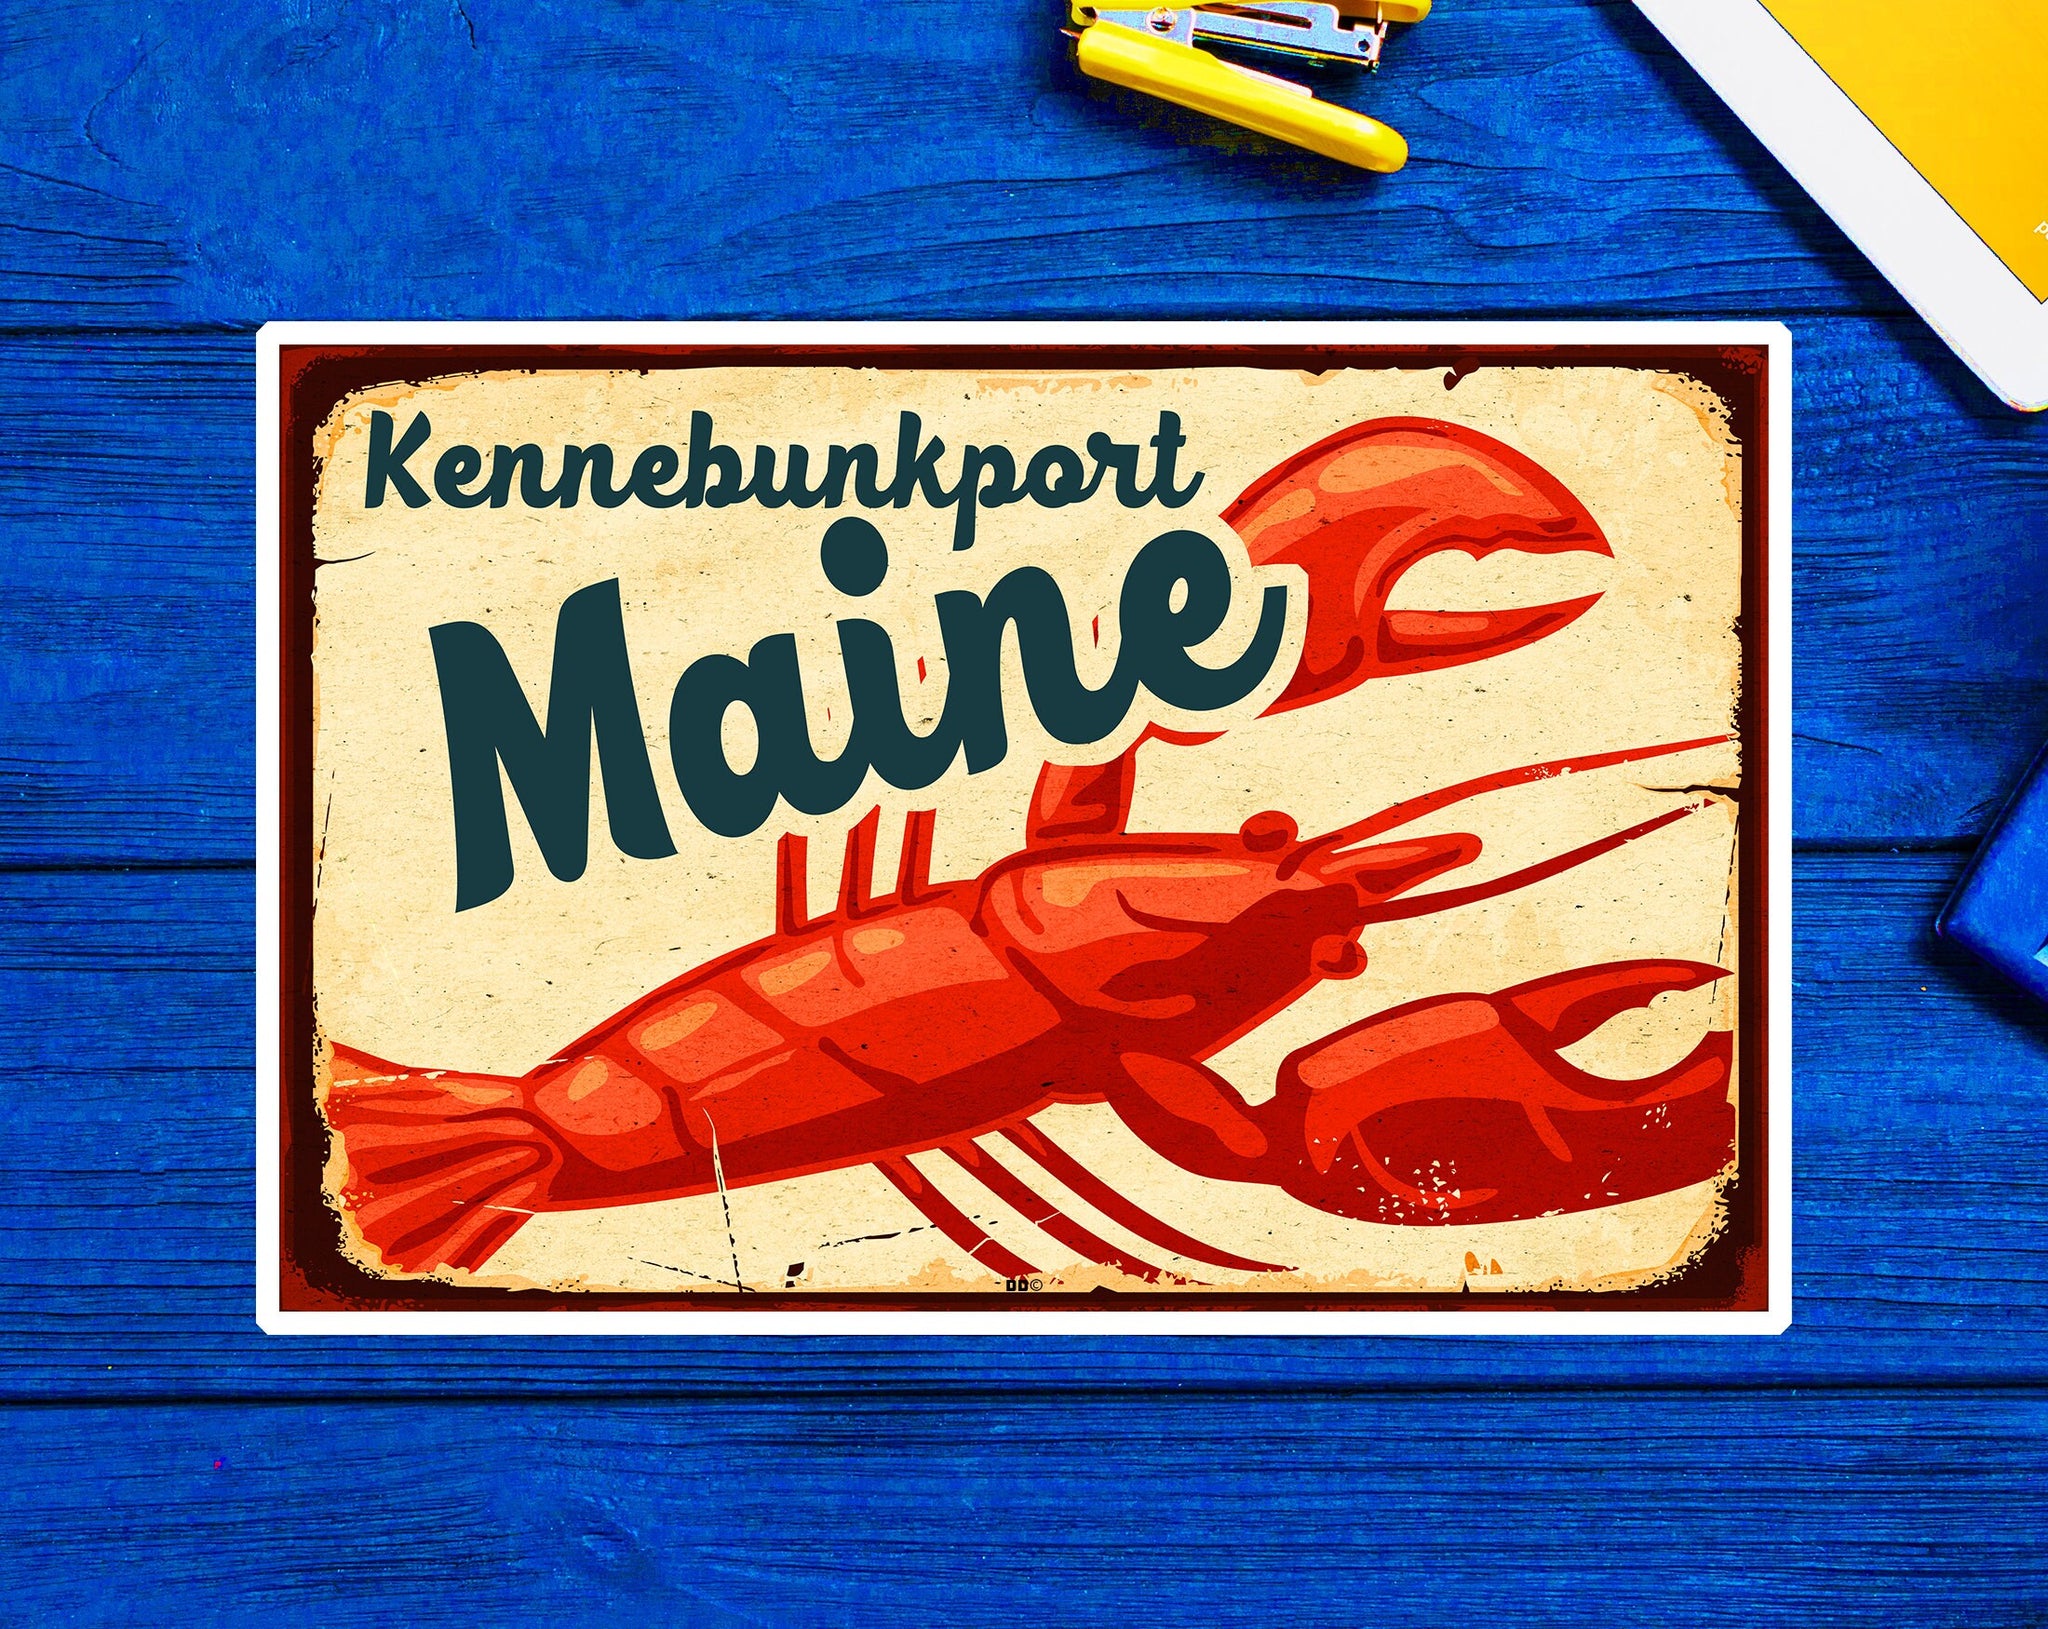 Kennebunkport Maine Decal Sticker Vinyl 3.75" Lobster Laptop Bumper Car Van